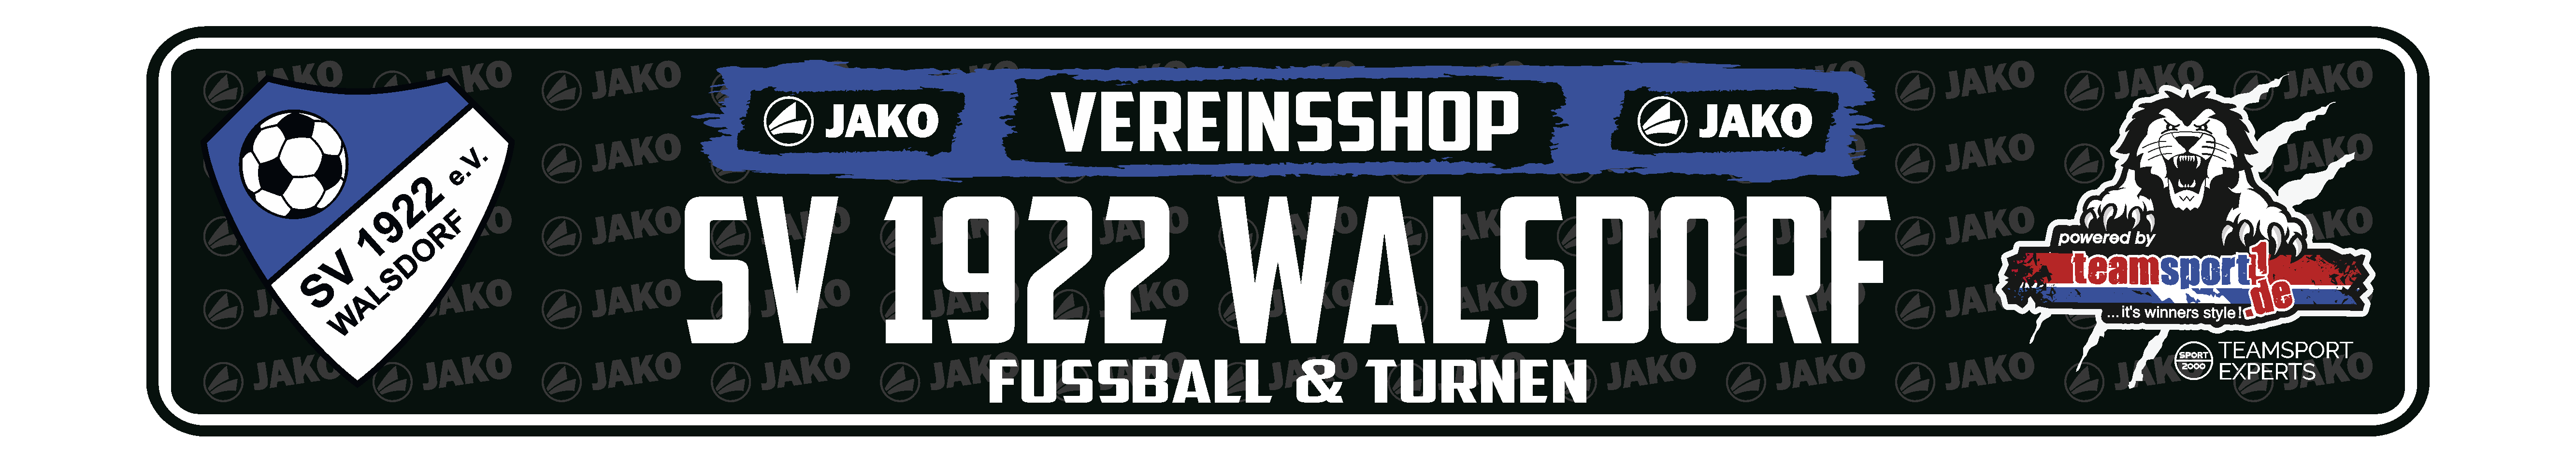 SV 1922 Walsdorf Title Image